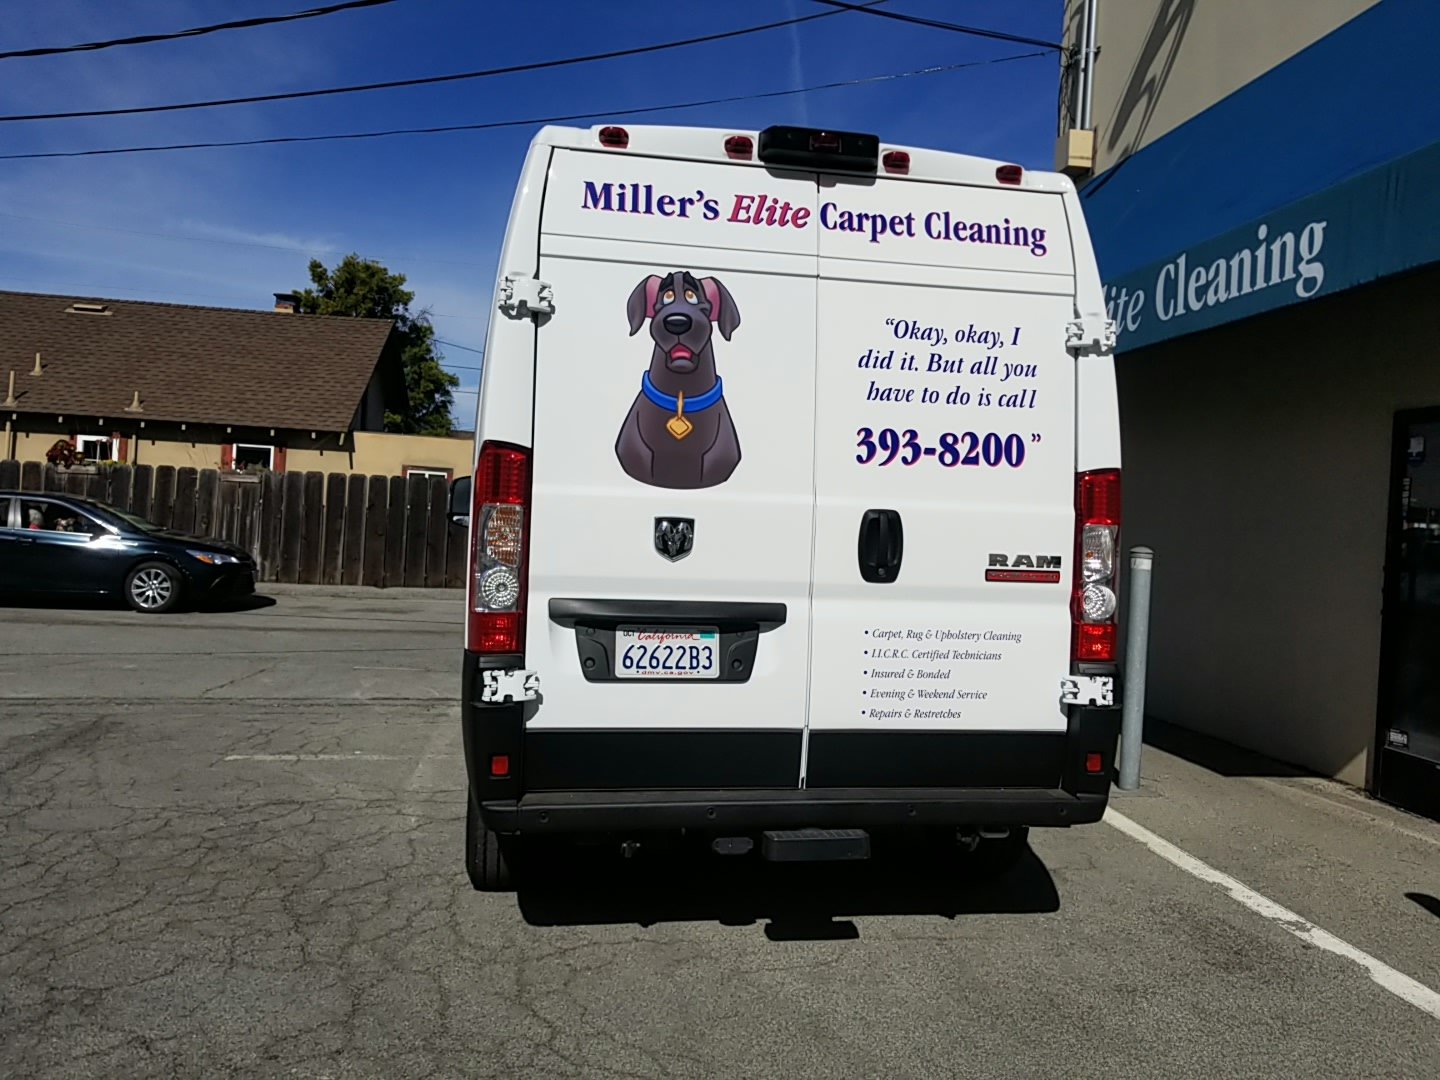 miller's elite van back Diesel the dog